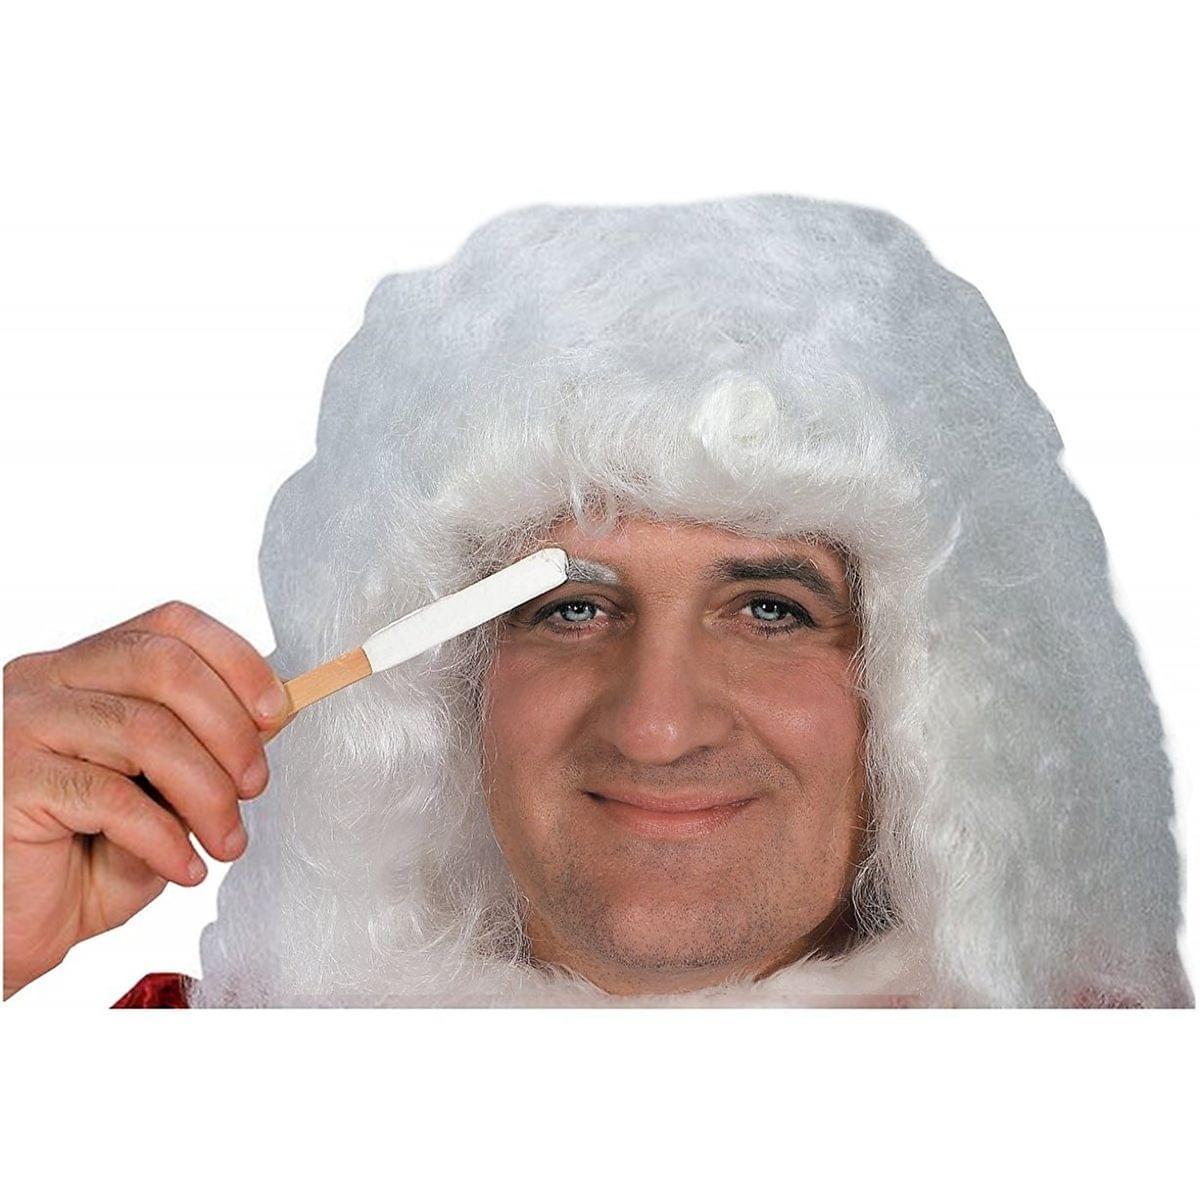 Santa Eyebrow Stick Costume Accessory